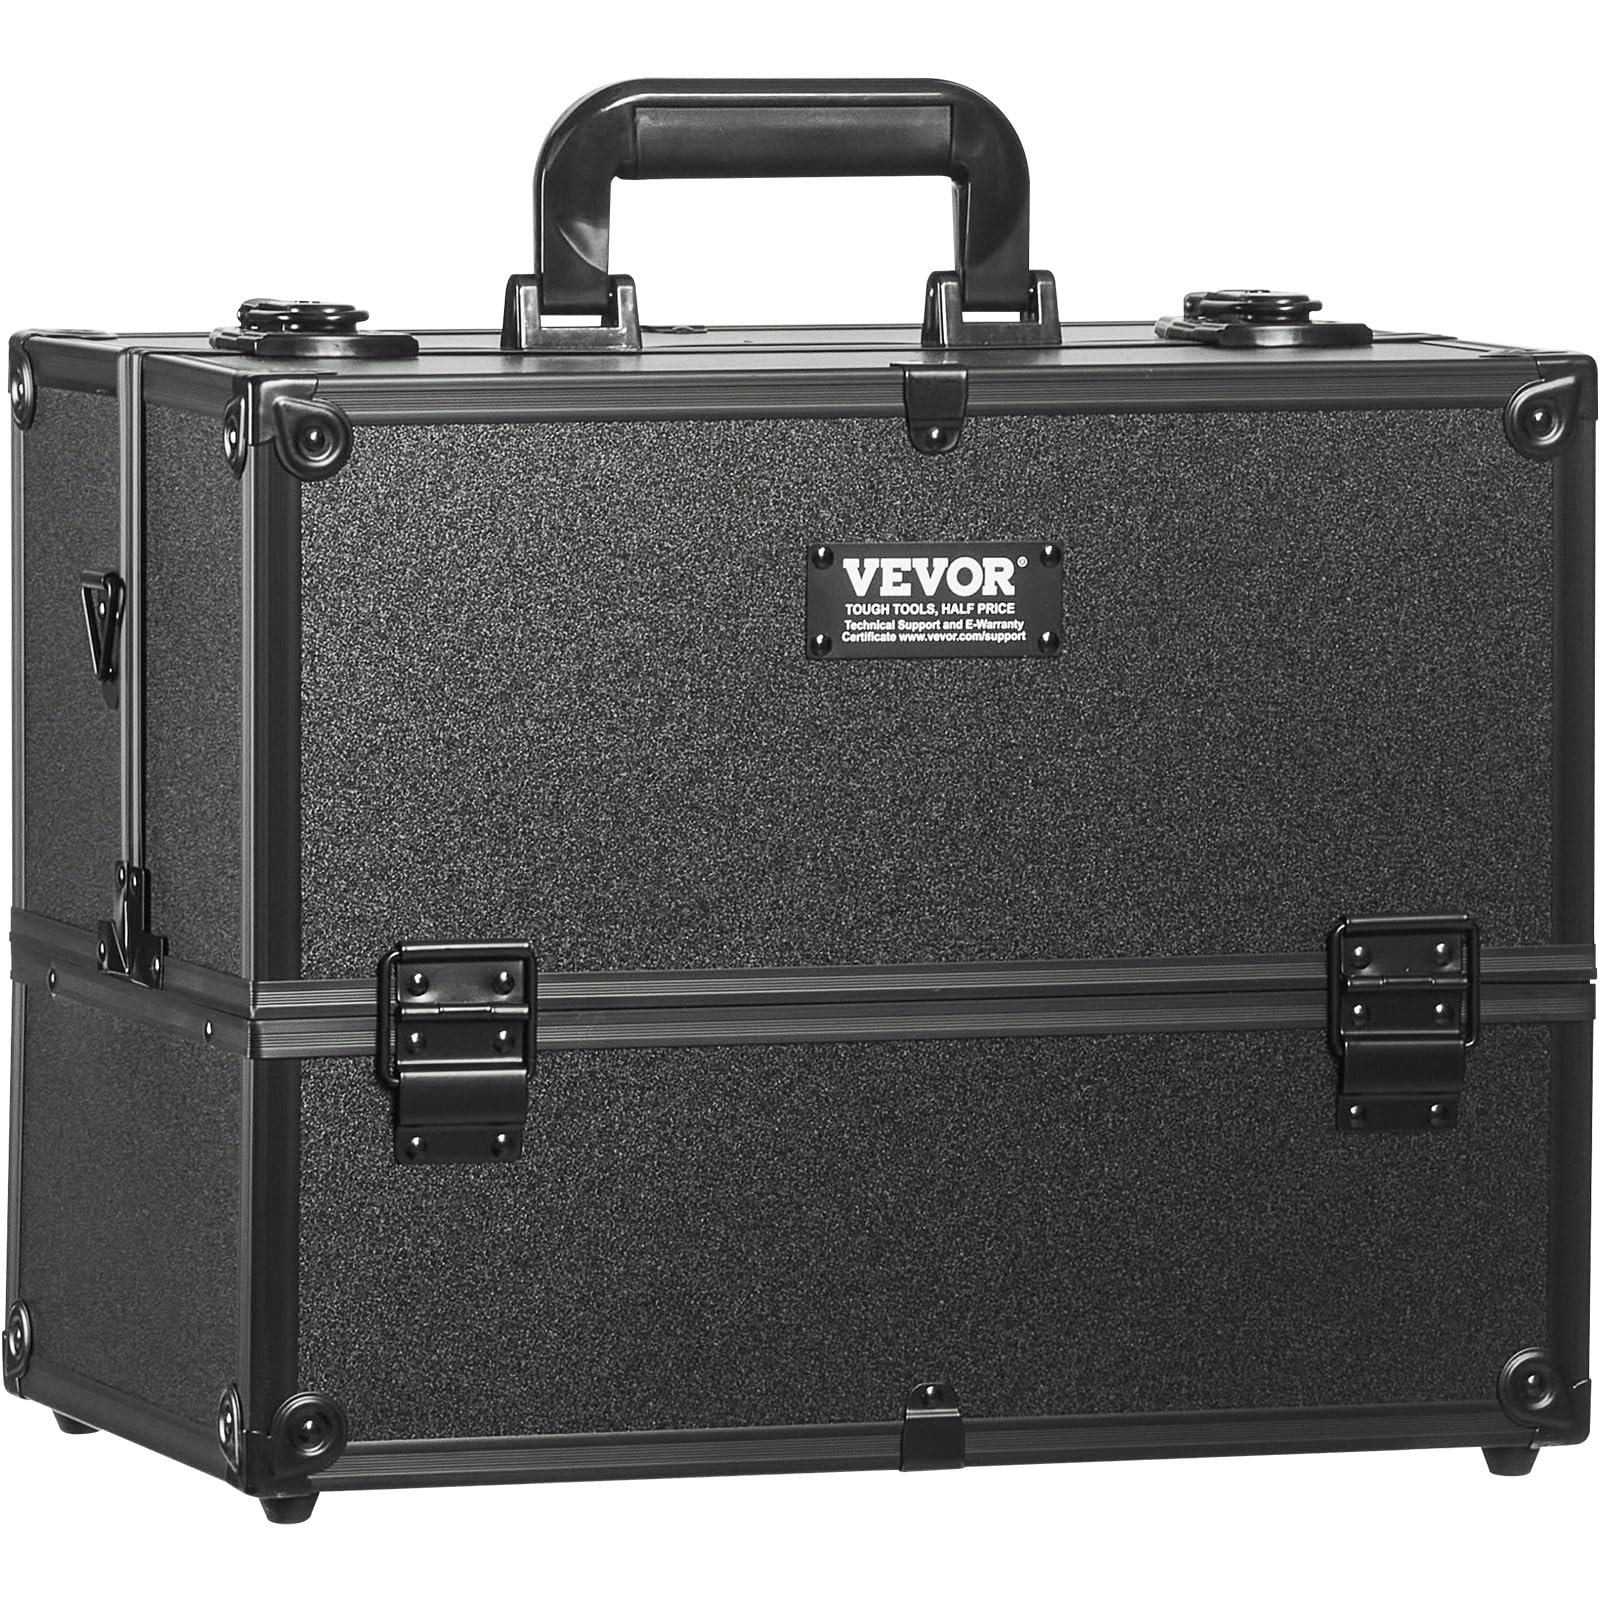 VEVOR Makeup Train Case Professional Makeup Storage Organizer Box Make Up Carrier for Women and Girls